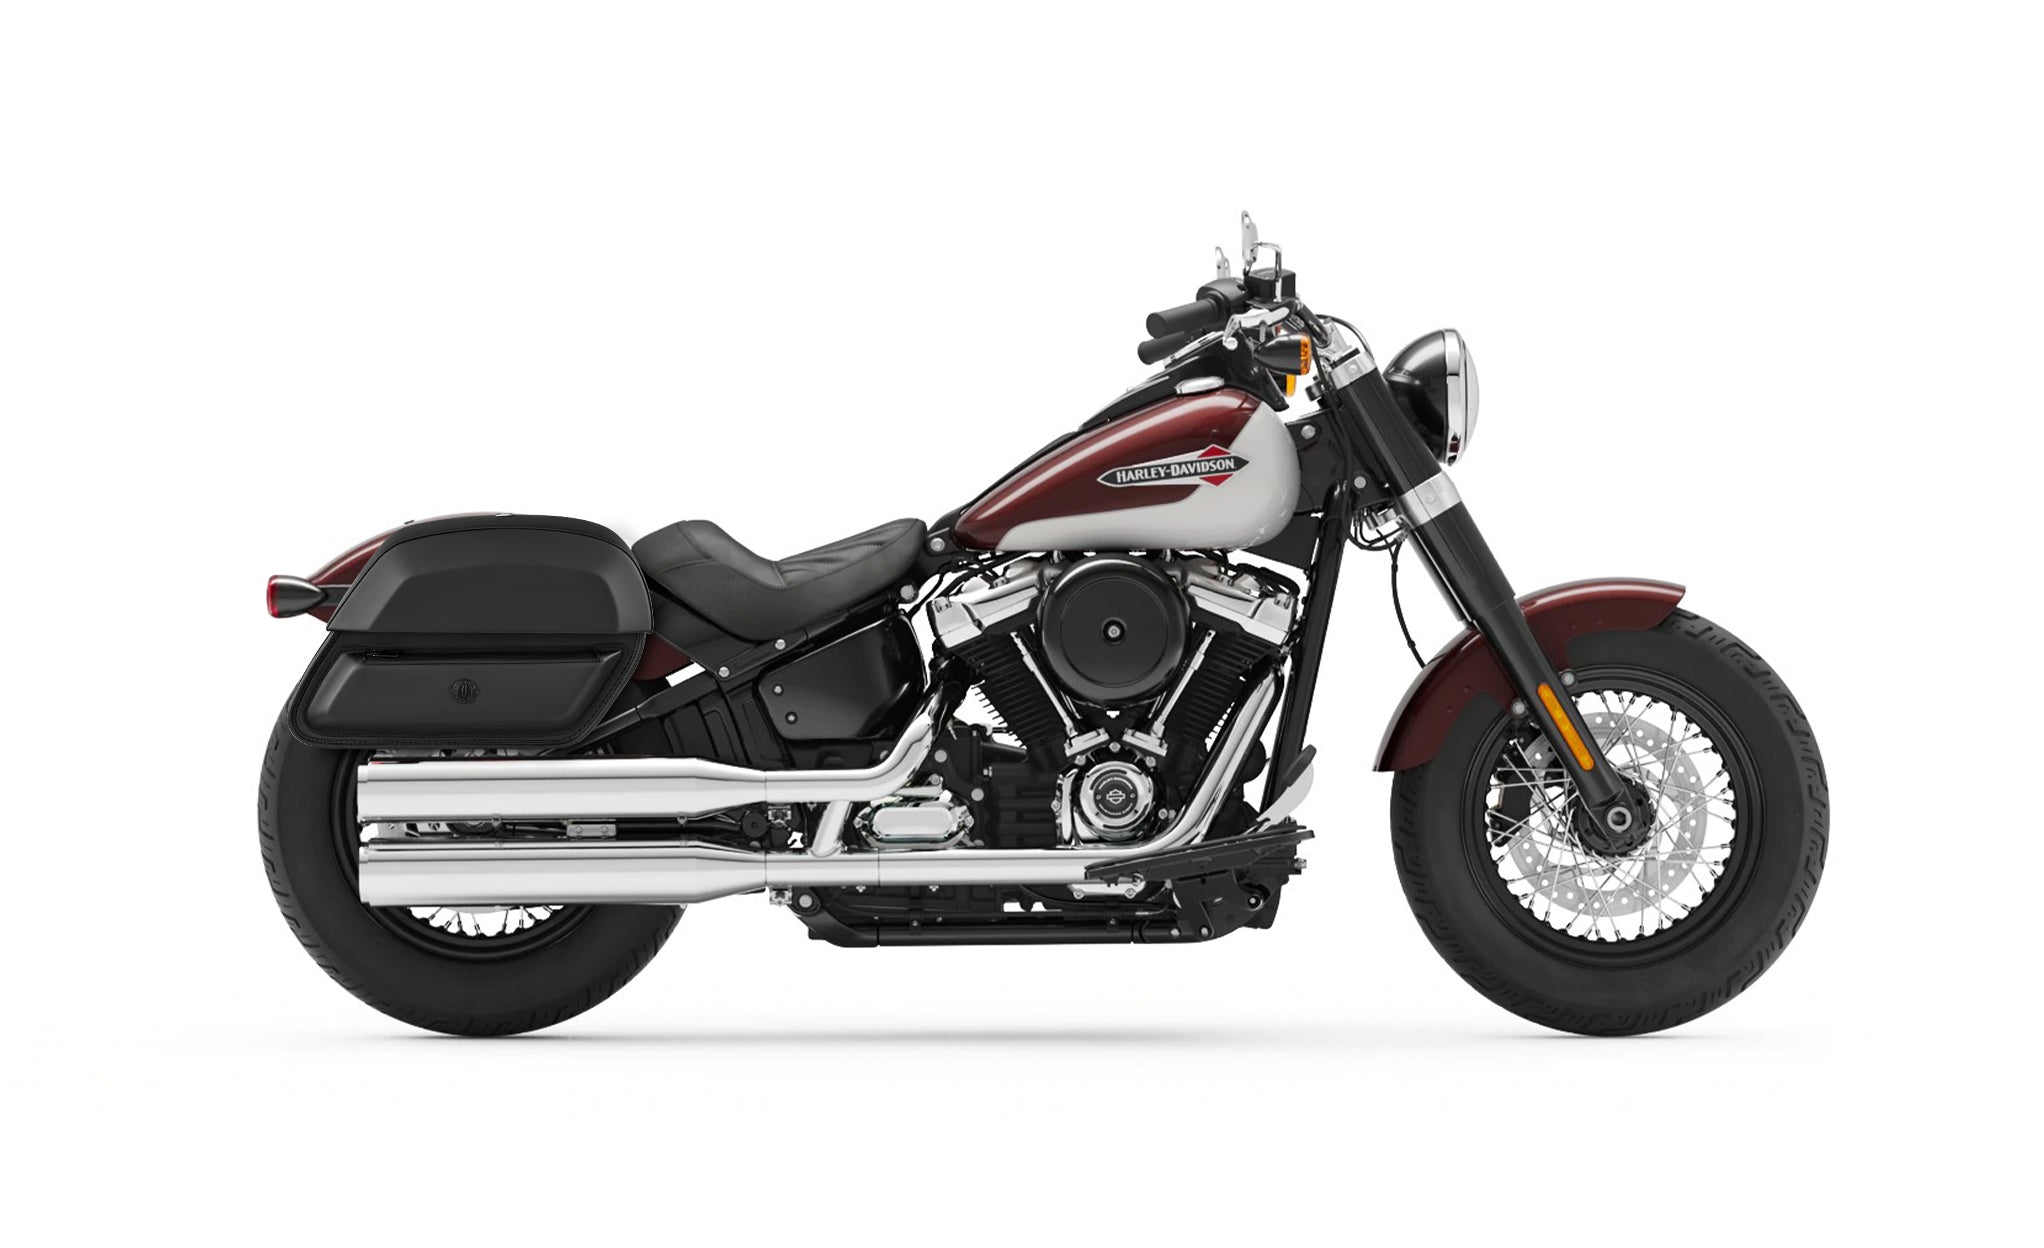 28L - Wraith Medium Saddlebags for Harley Softail Slim FLSL BAG on Bike View @expand